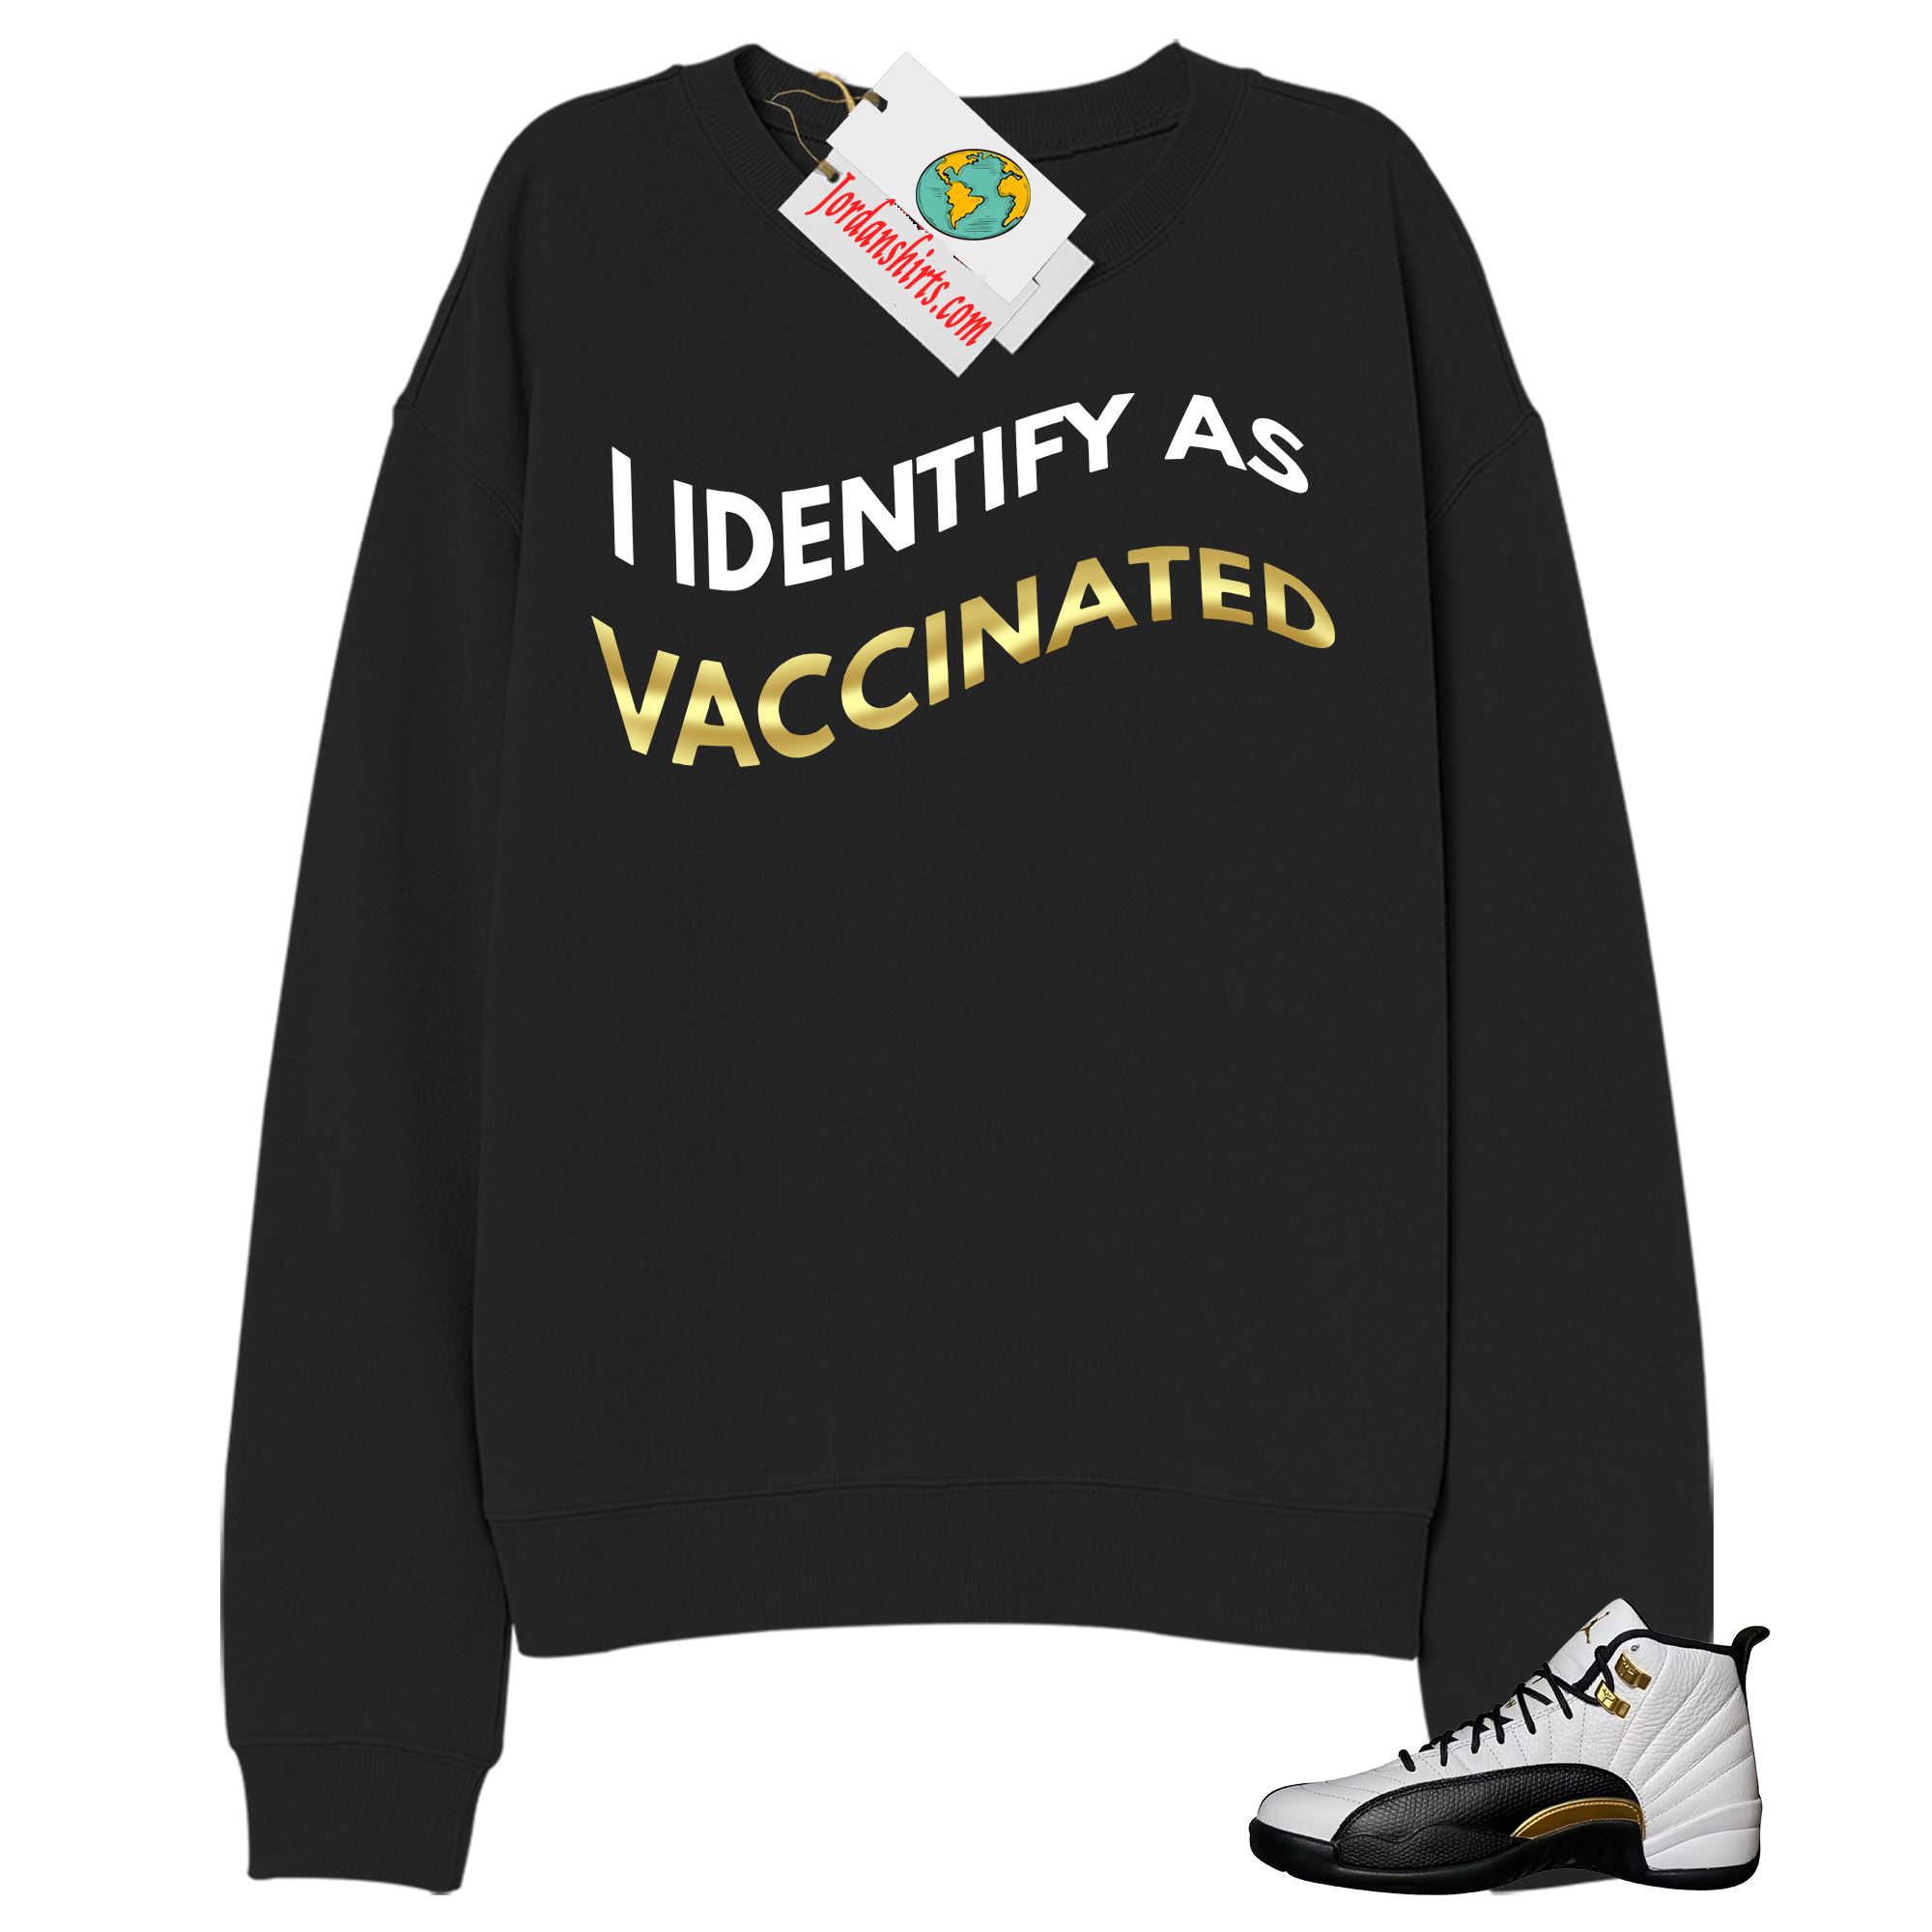 Jordan 12 Sweatshirt, I Identify As Vaccinated Black Sweatshirt Air Jordan 12 Royalty 12s Full Size Up To 5xl